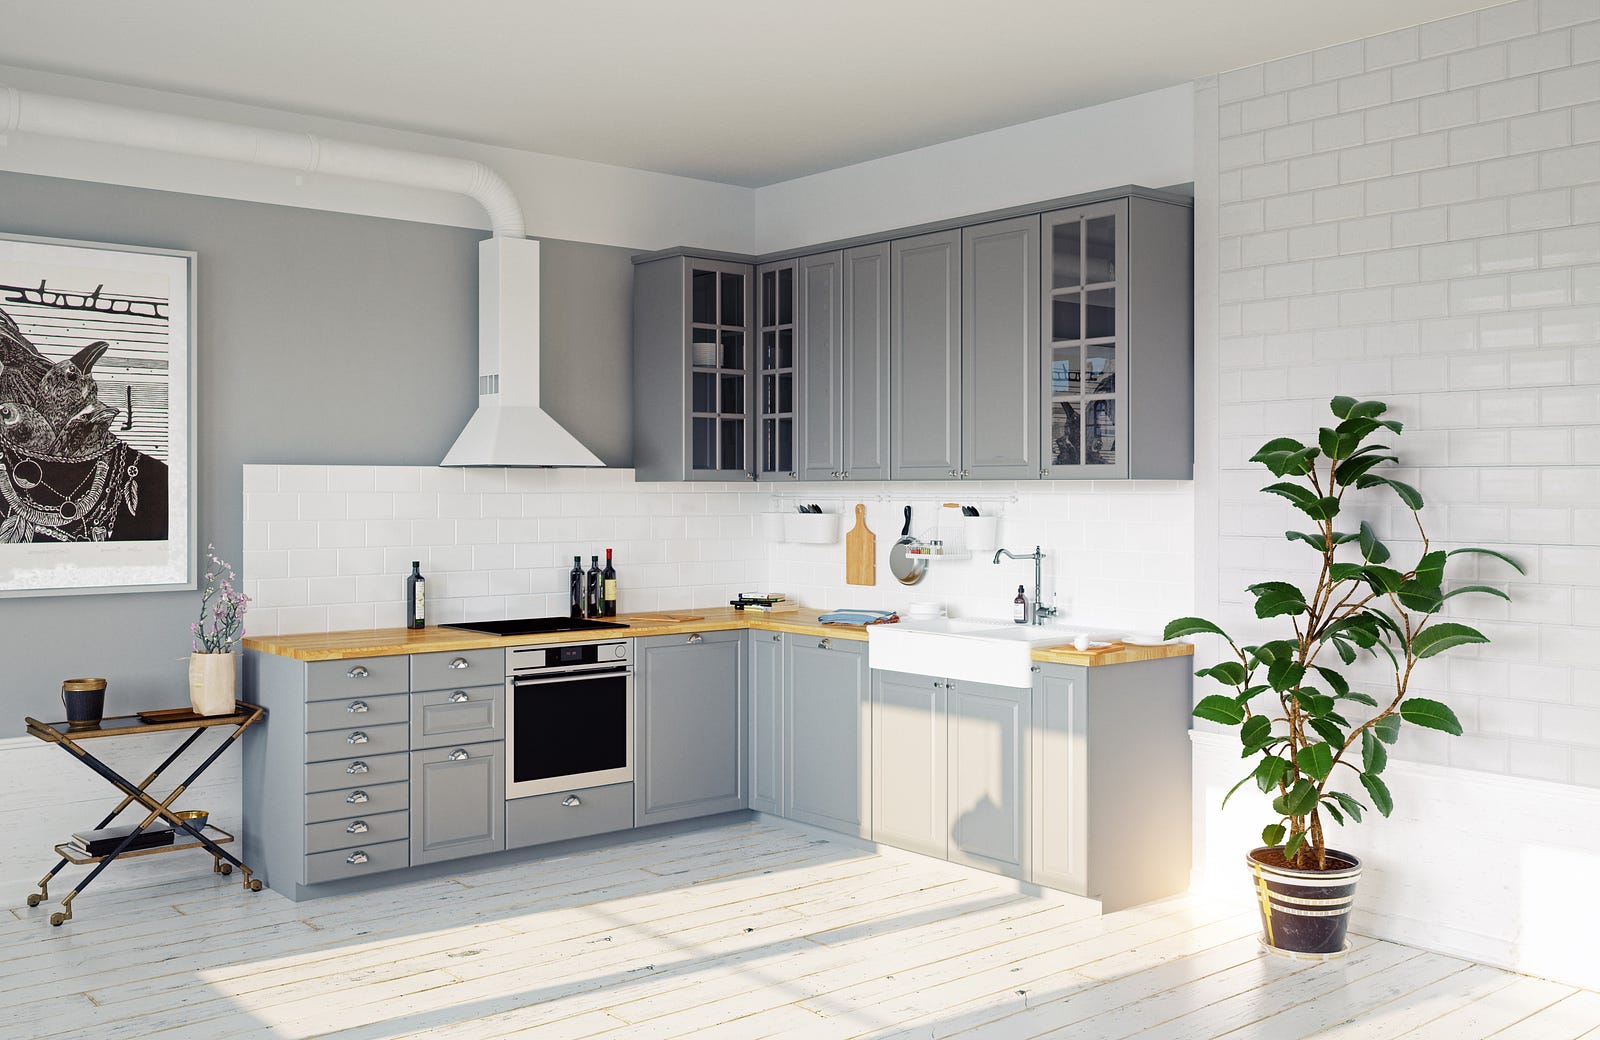 Modern style grey kitchen in an open flat